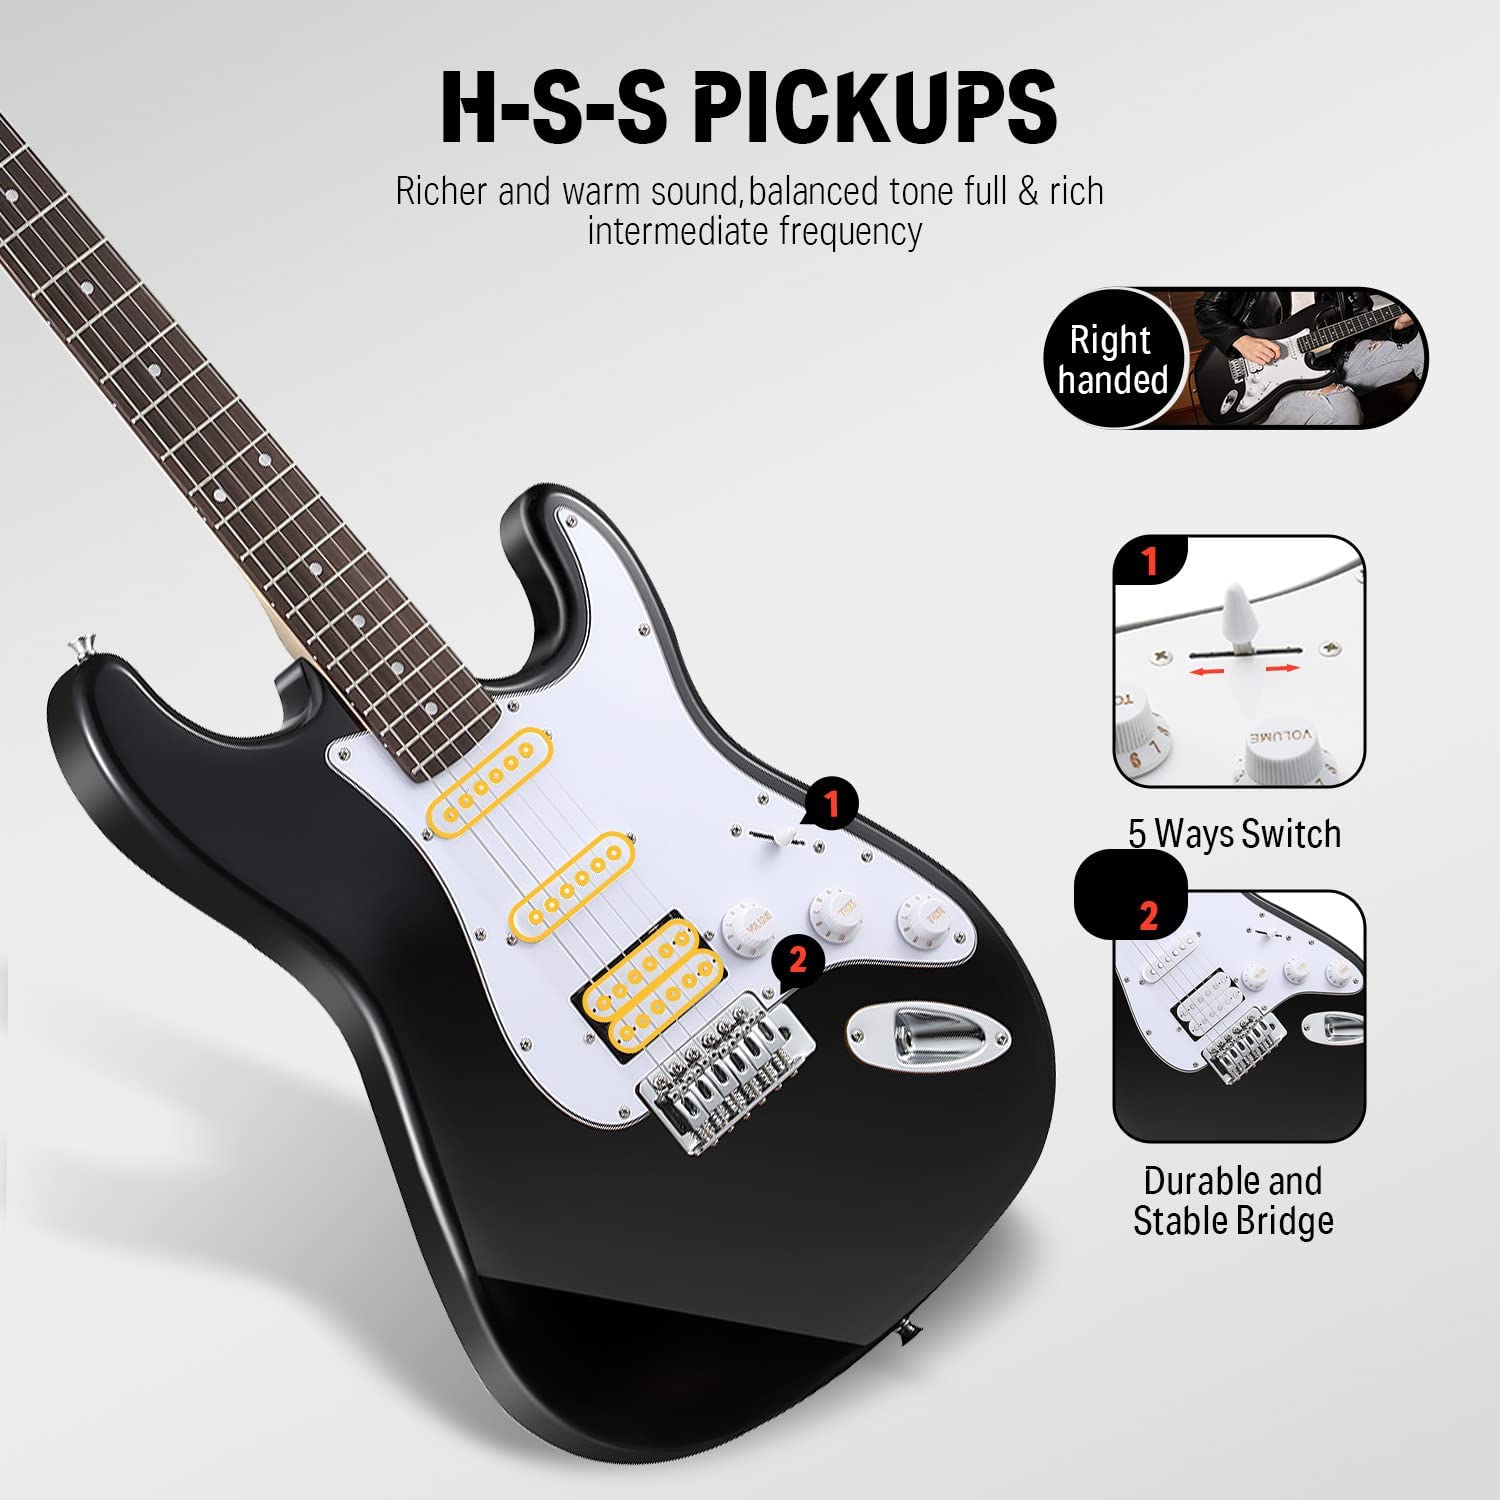 Donner DST-100B 39" Electric Guitar Beginner Kit Solid Body Full Size HSS for Starter, with Amplifier, Bag, Digital Tuner, Capo, Strap, String, Cable, Picks, Black - image 2 of 11